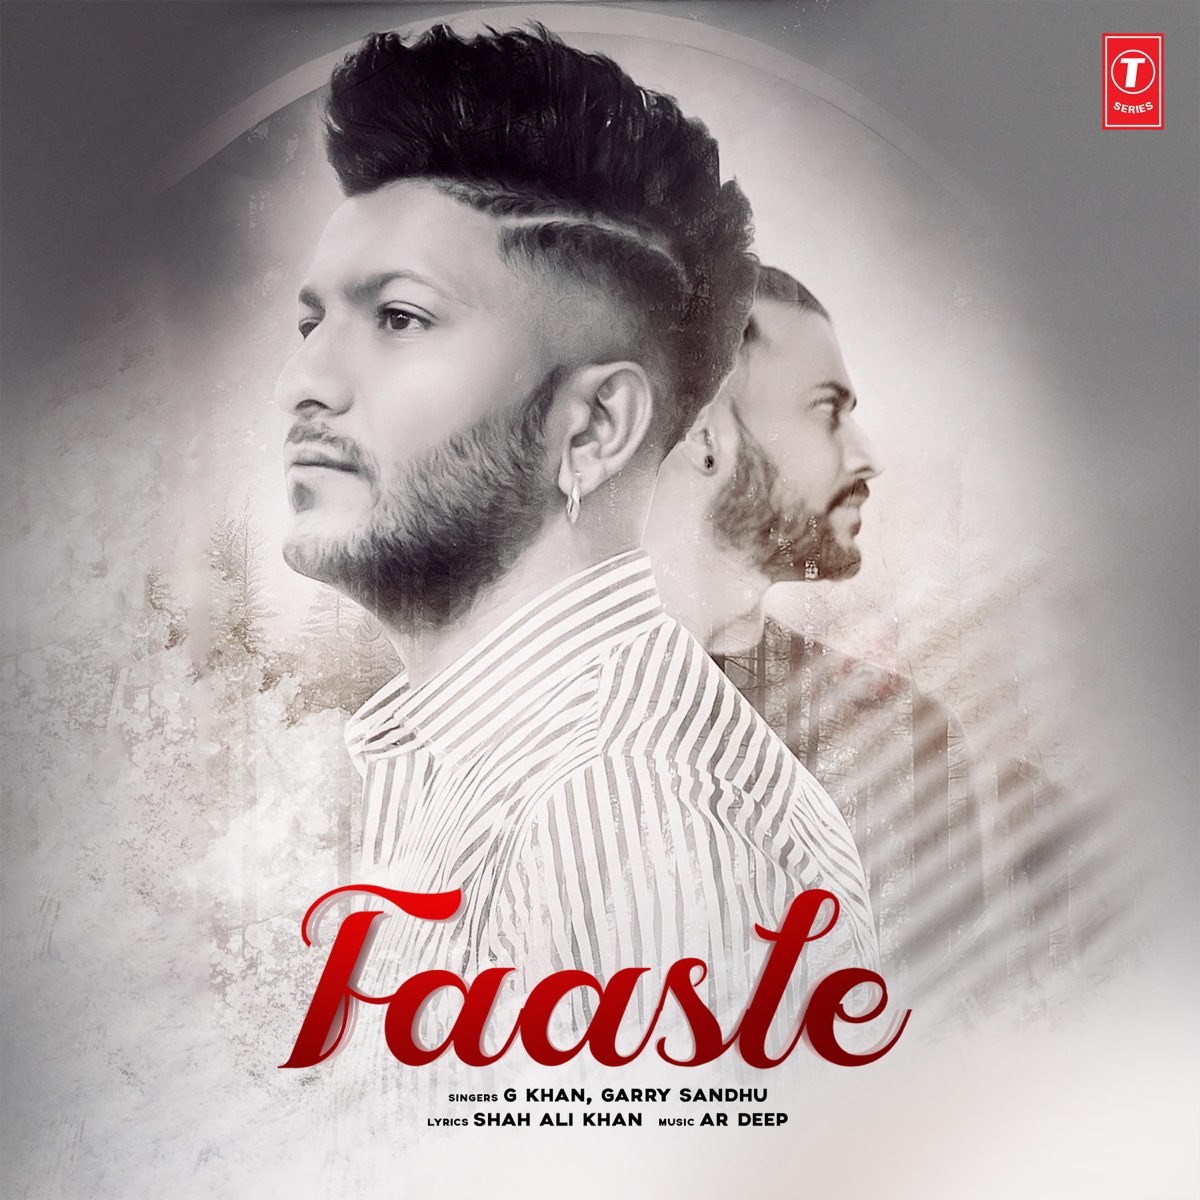 Faasle - Single by G. Khan & Garry Sandhu on Apple Music